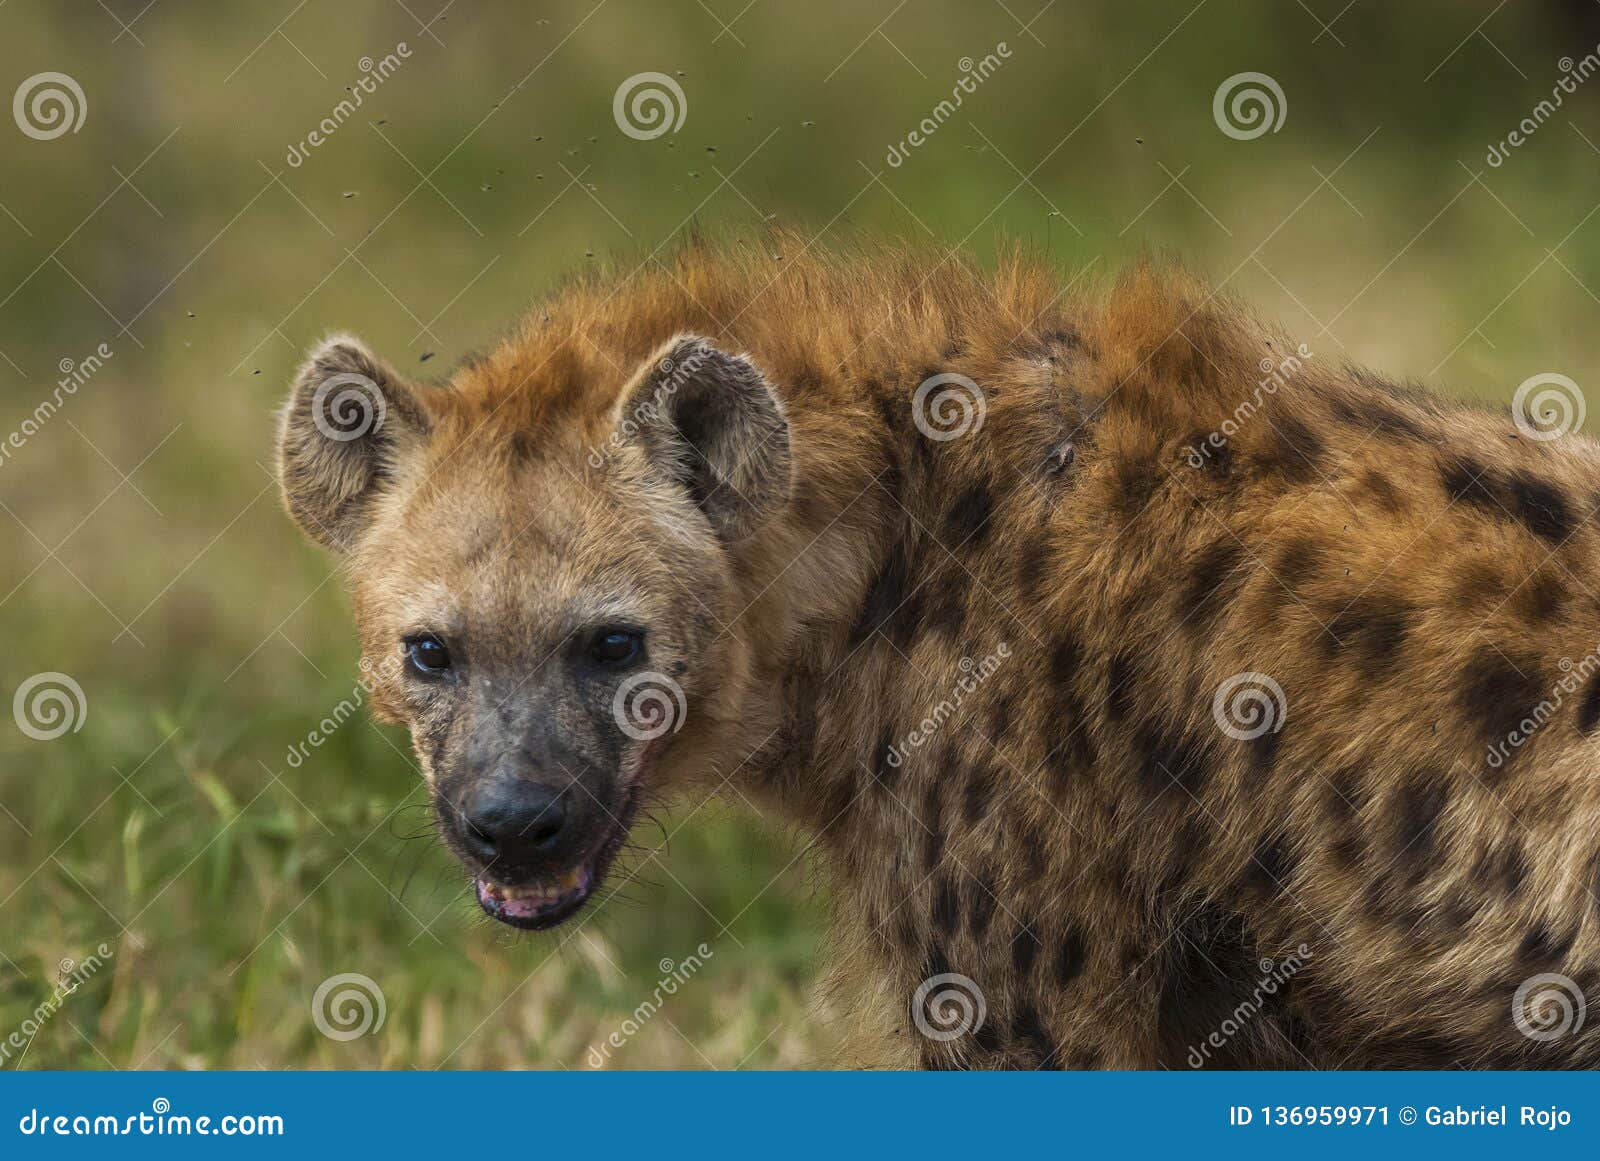 hyena south africa